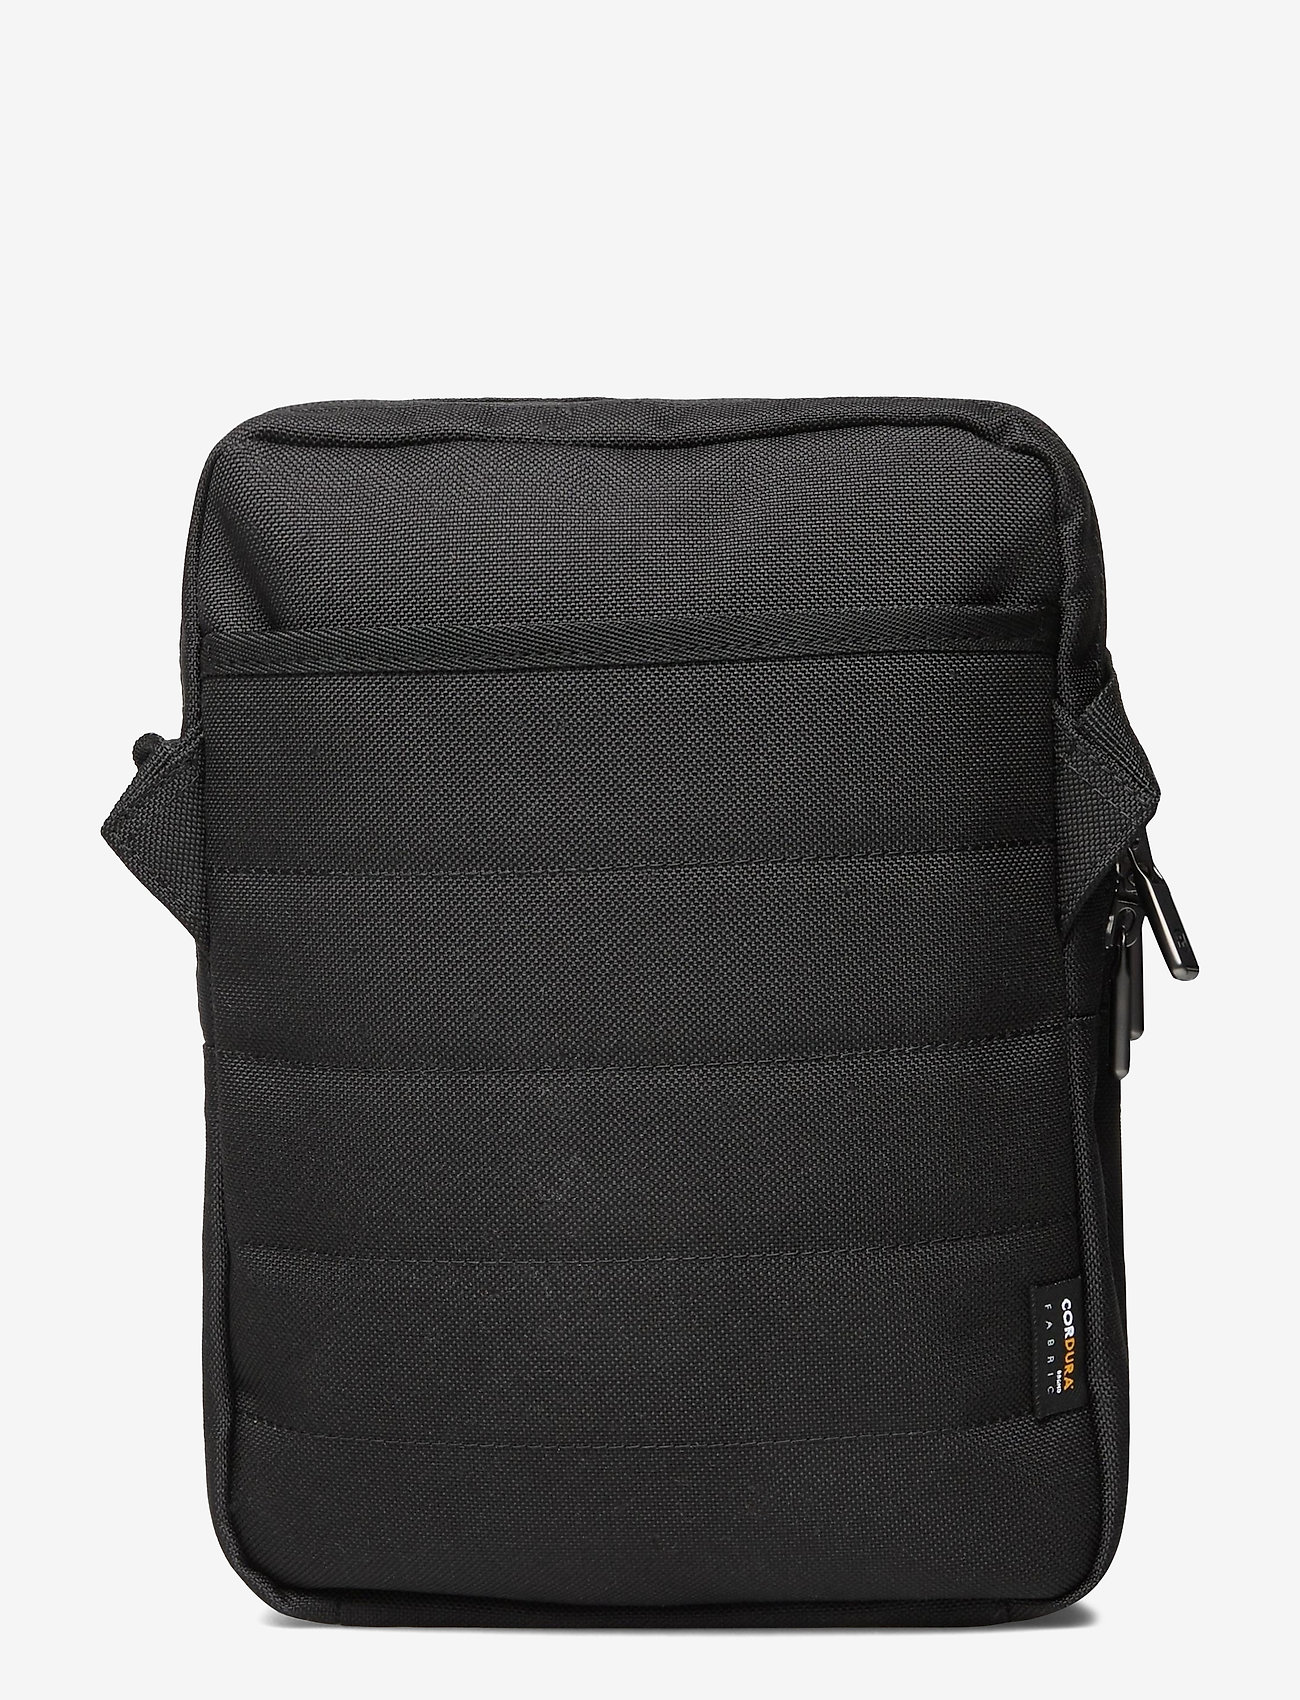 Victorinox - Werks Professional Cordura, Crossbody Tablet Bag - black - 1